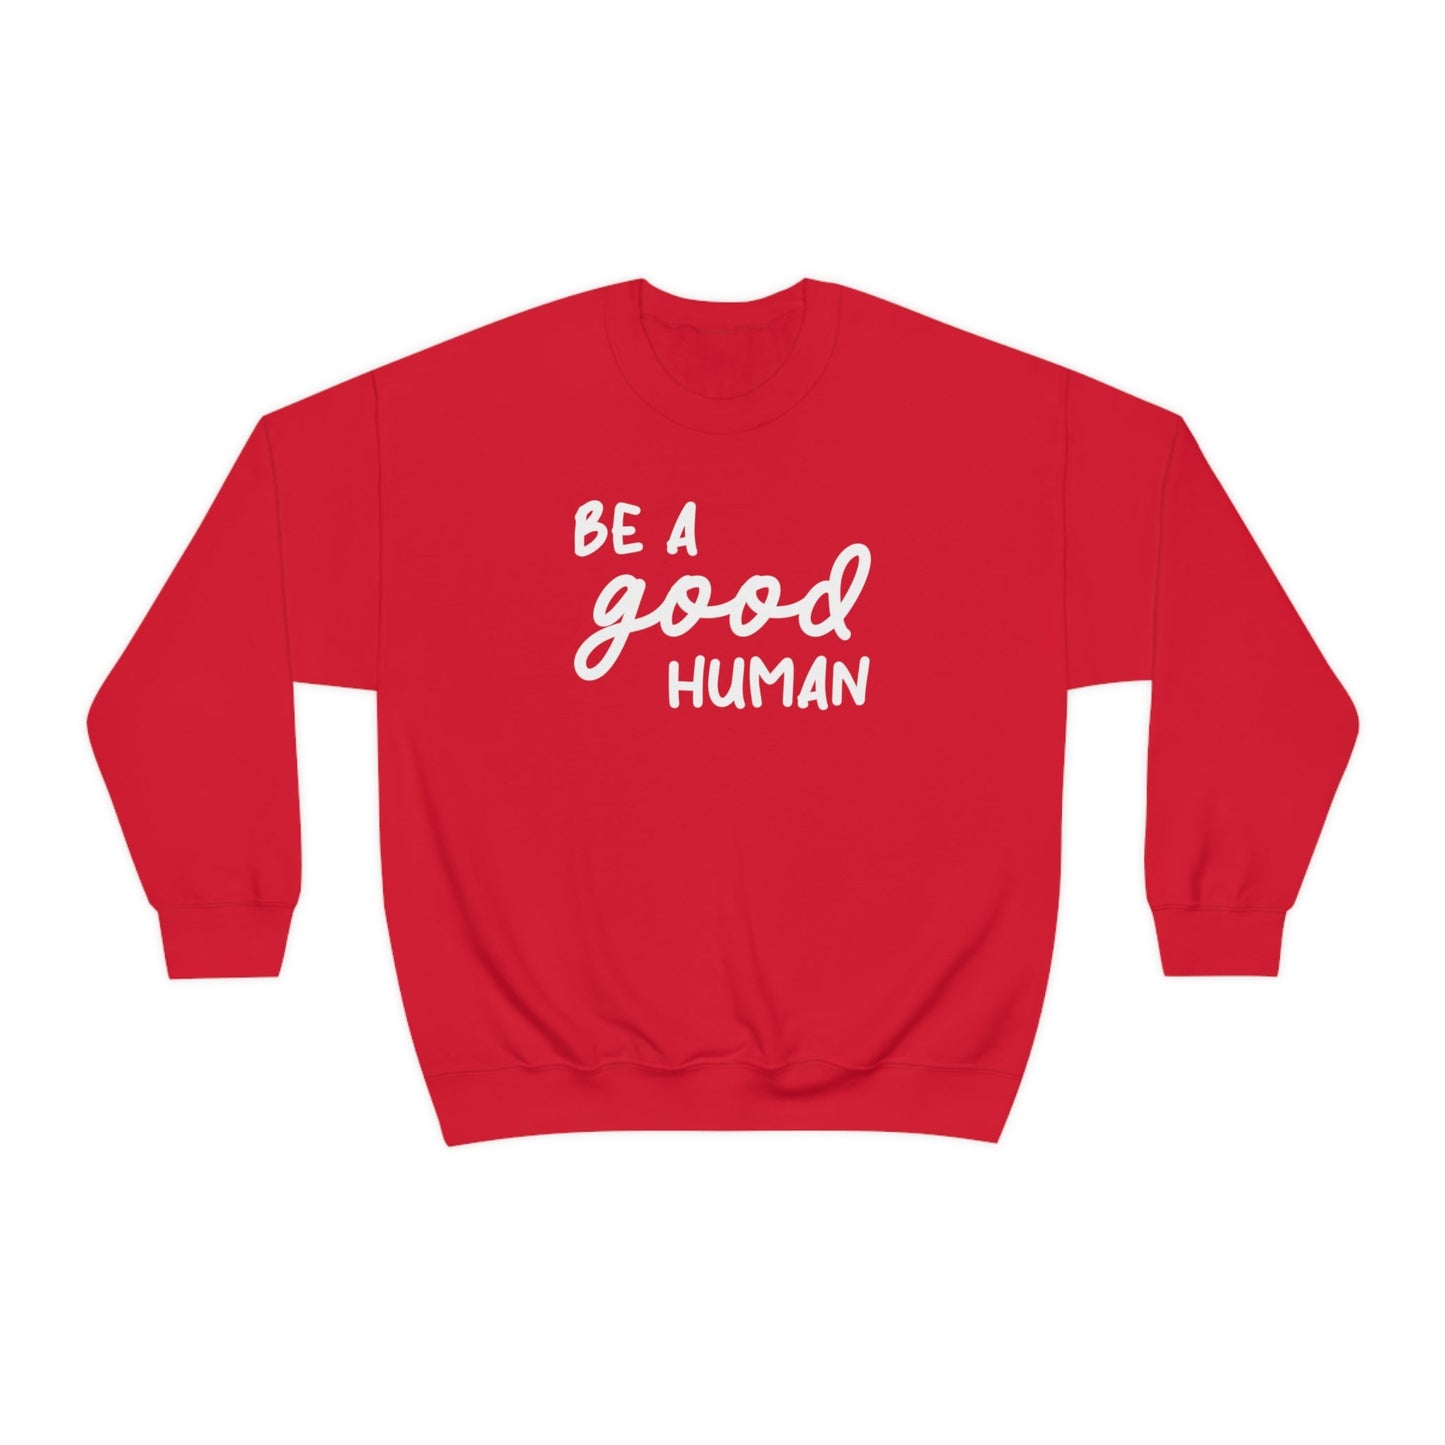 Be A Good Human | Crewneck Sweatshirt - Detezi Designs-10771312644115252589